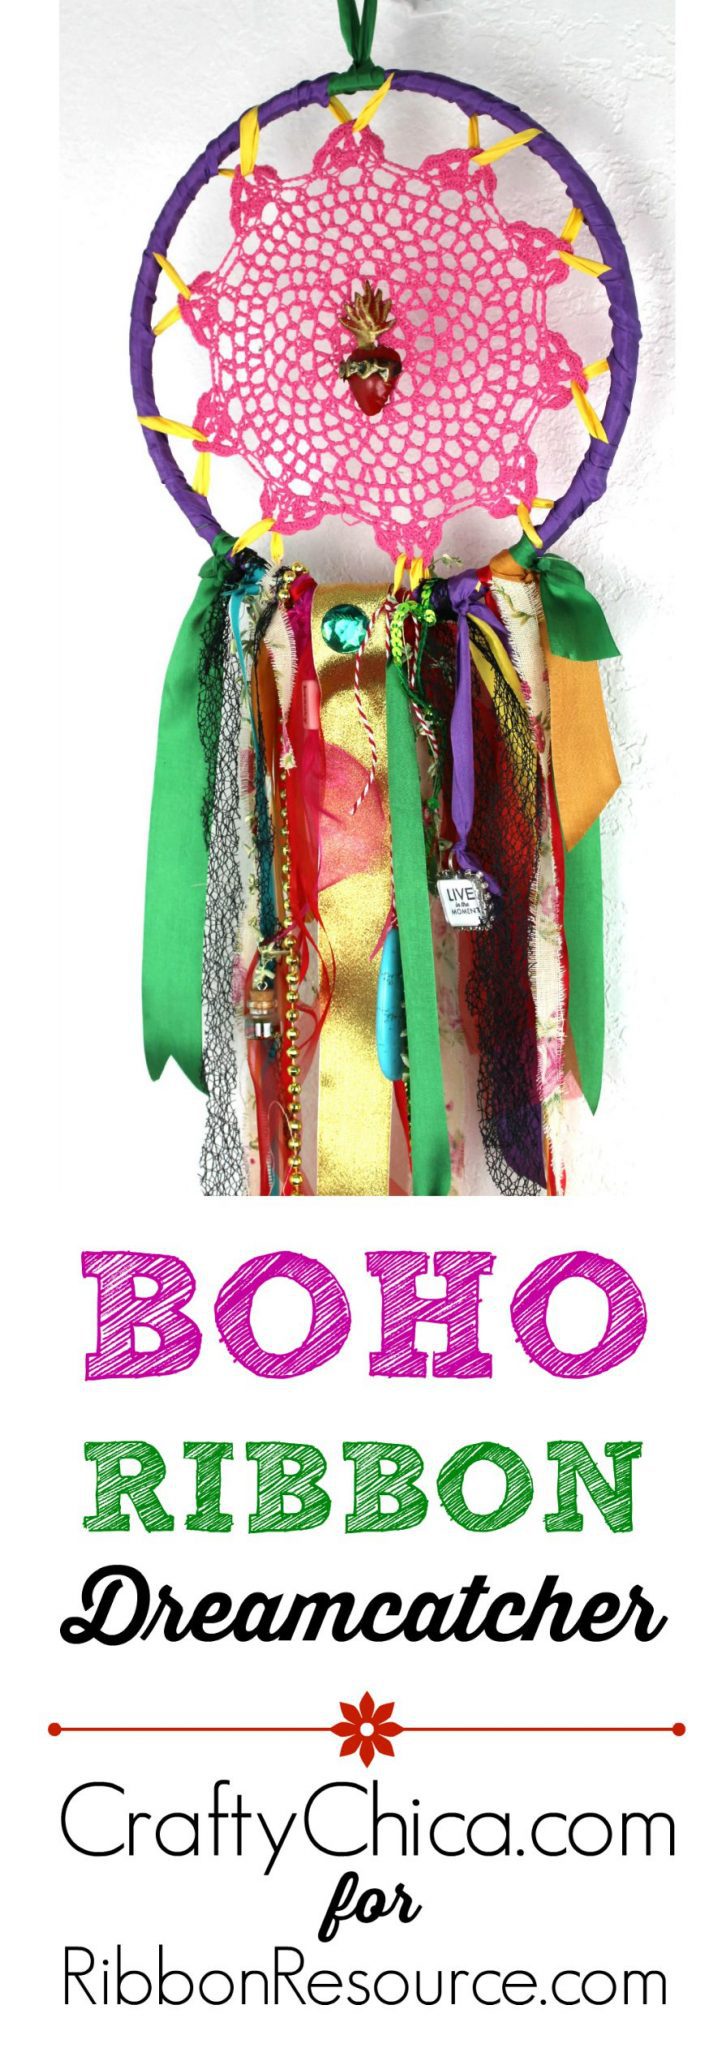 Boho Ribbon Dreamcatcher by CraftyChica.com